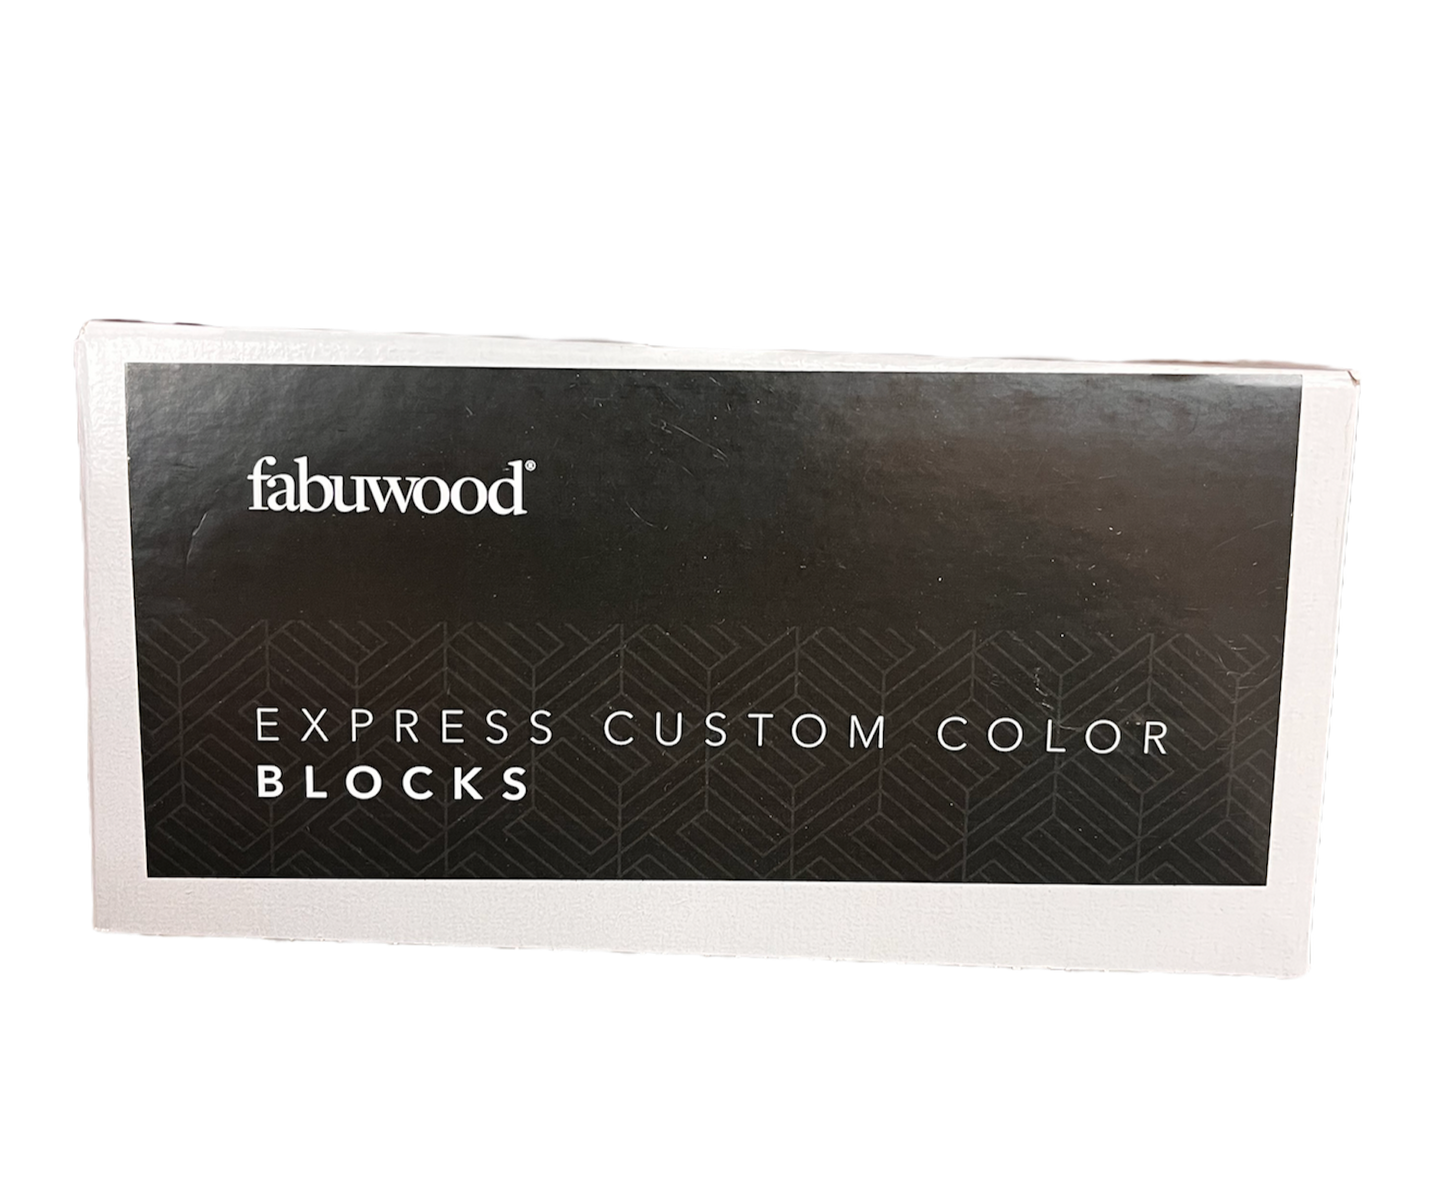 Fabuwood Express Custom Color Blocks